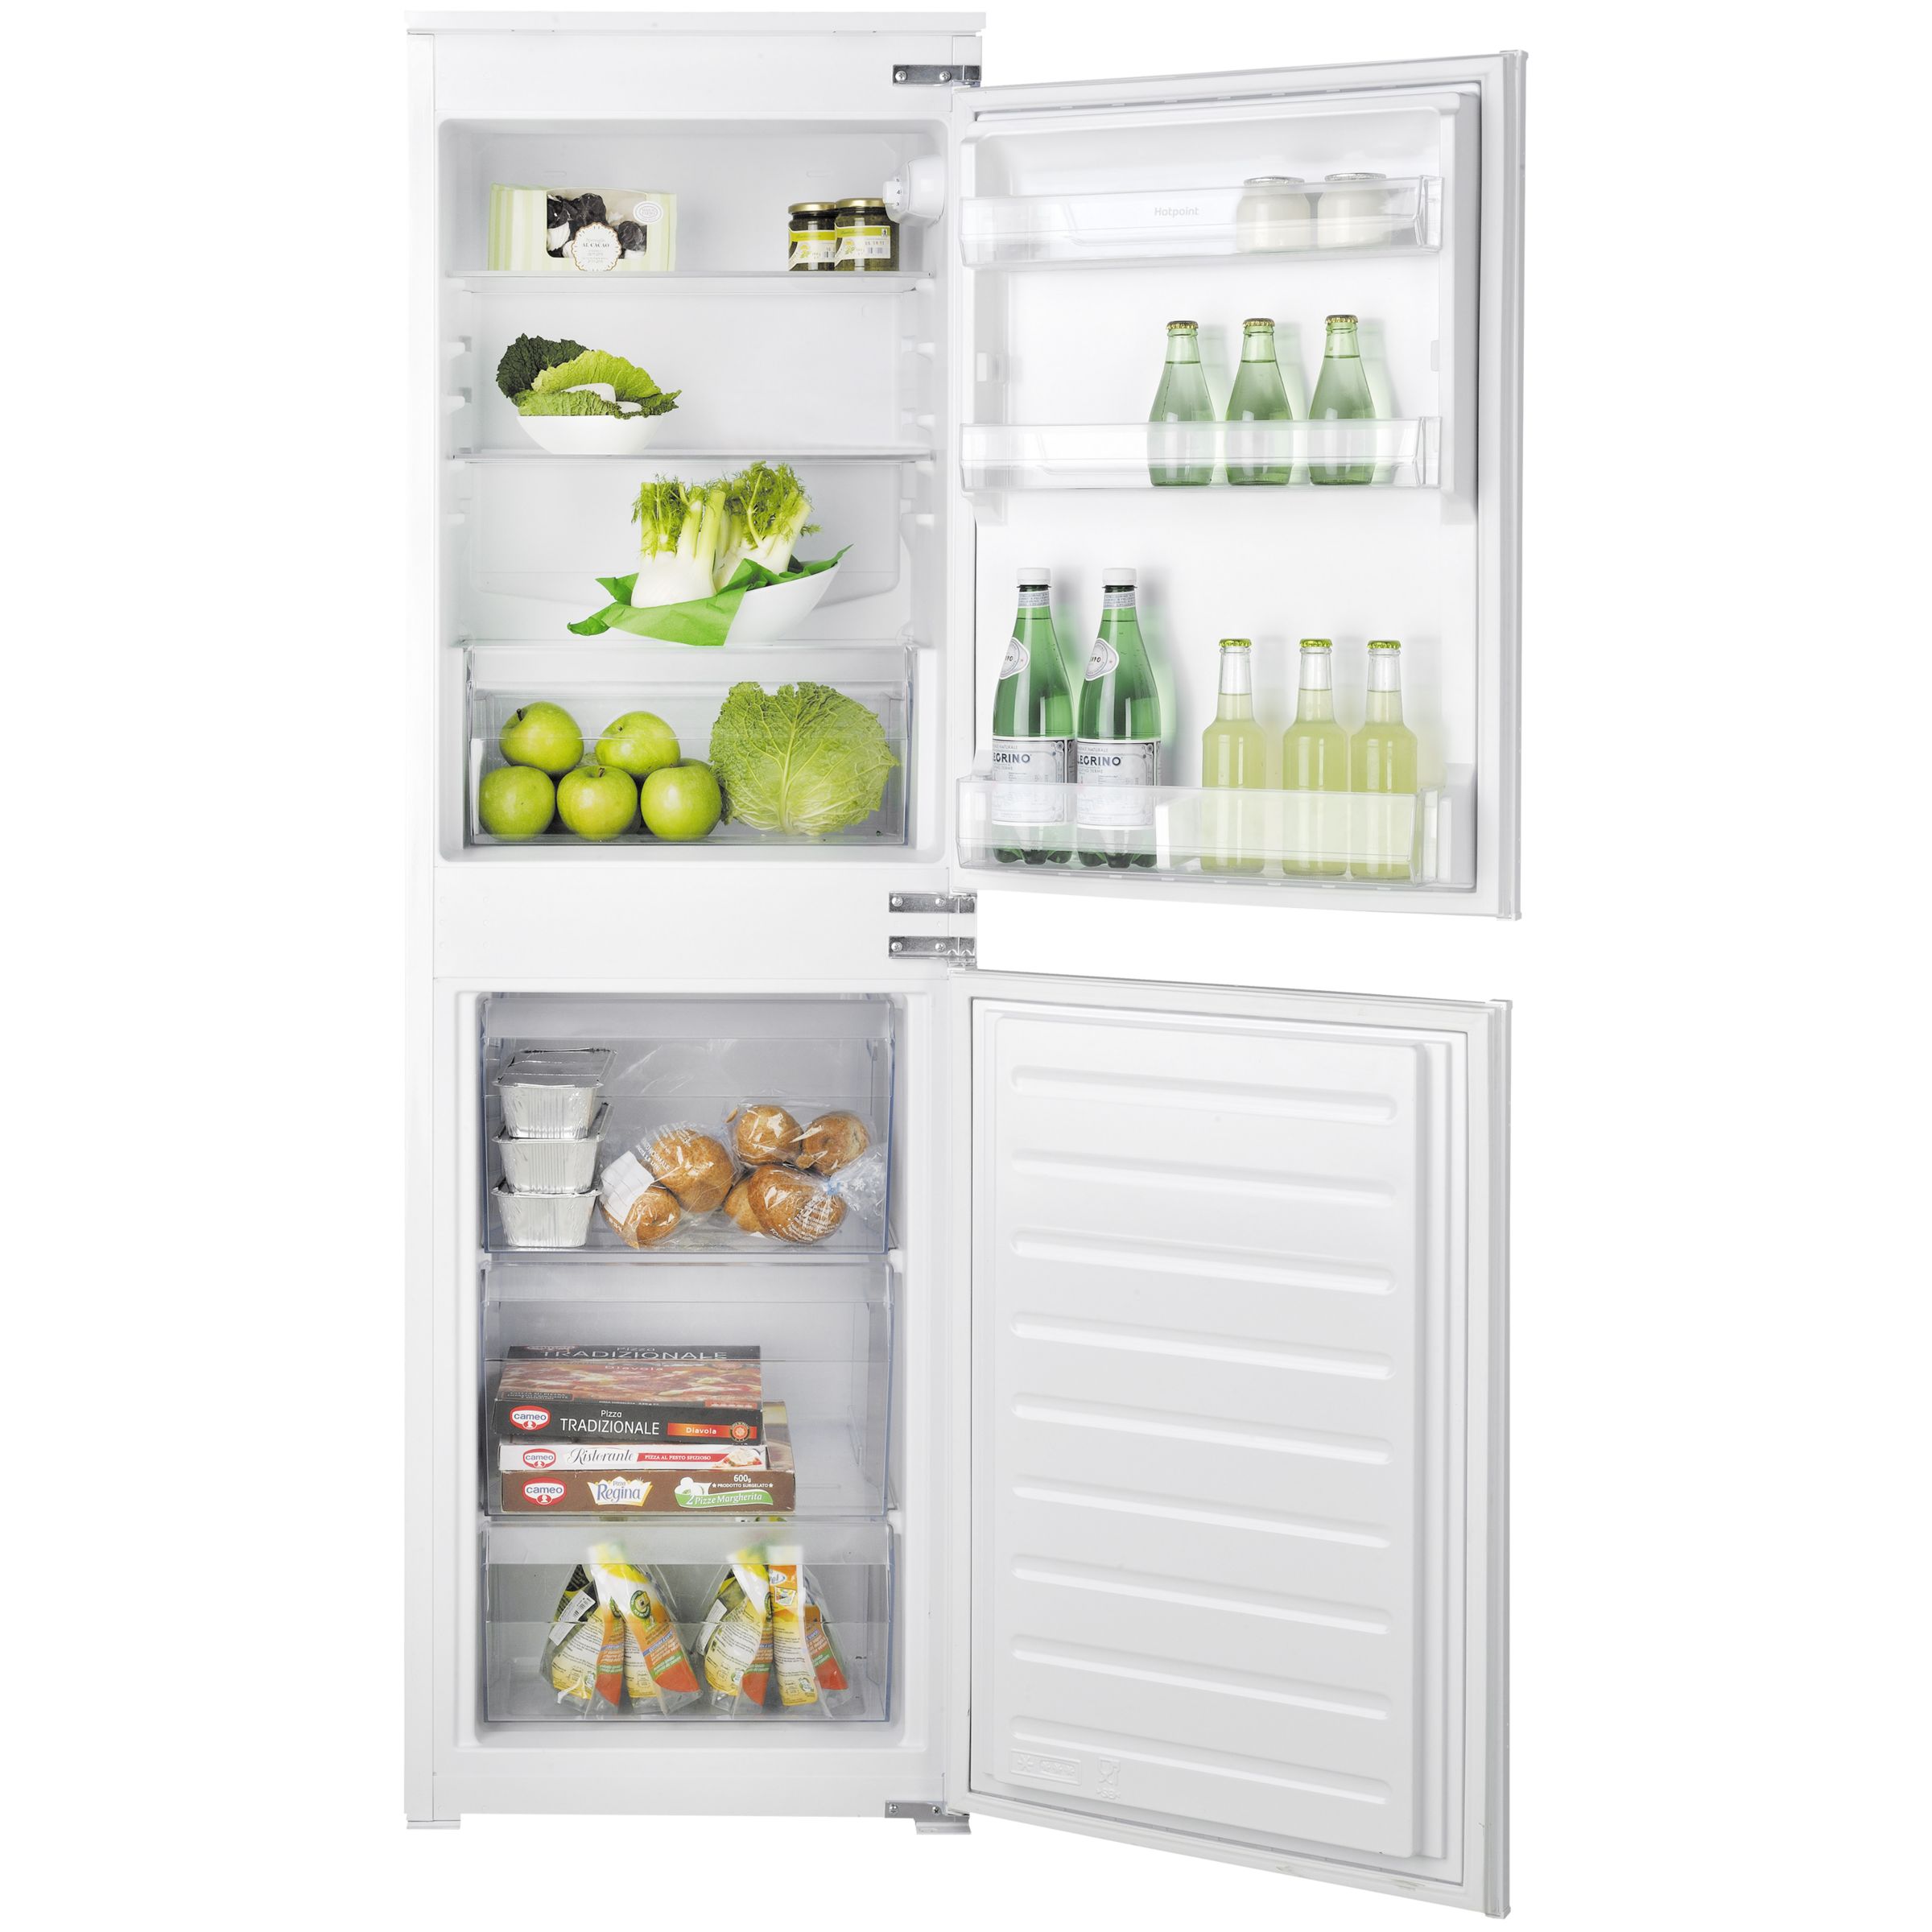 Hotpoint HMCB5050AA.UK Integrated Fridge Freezer, A+ Energy Rating, 54cm Wide, White